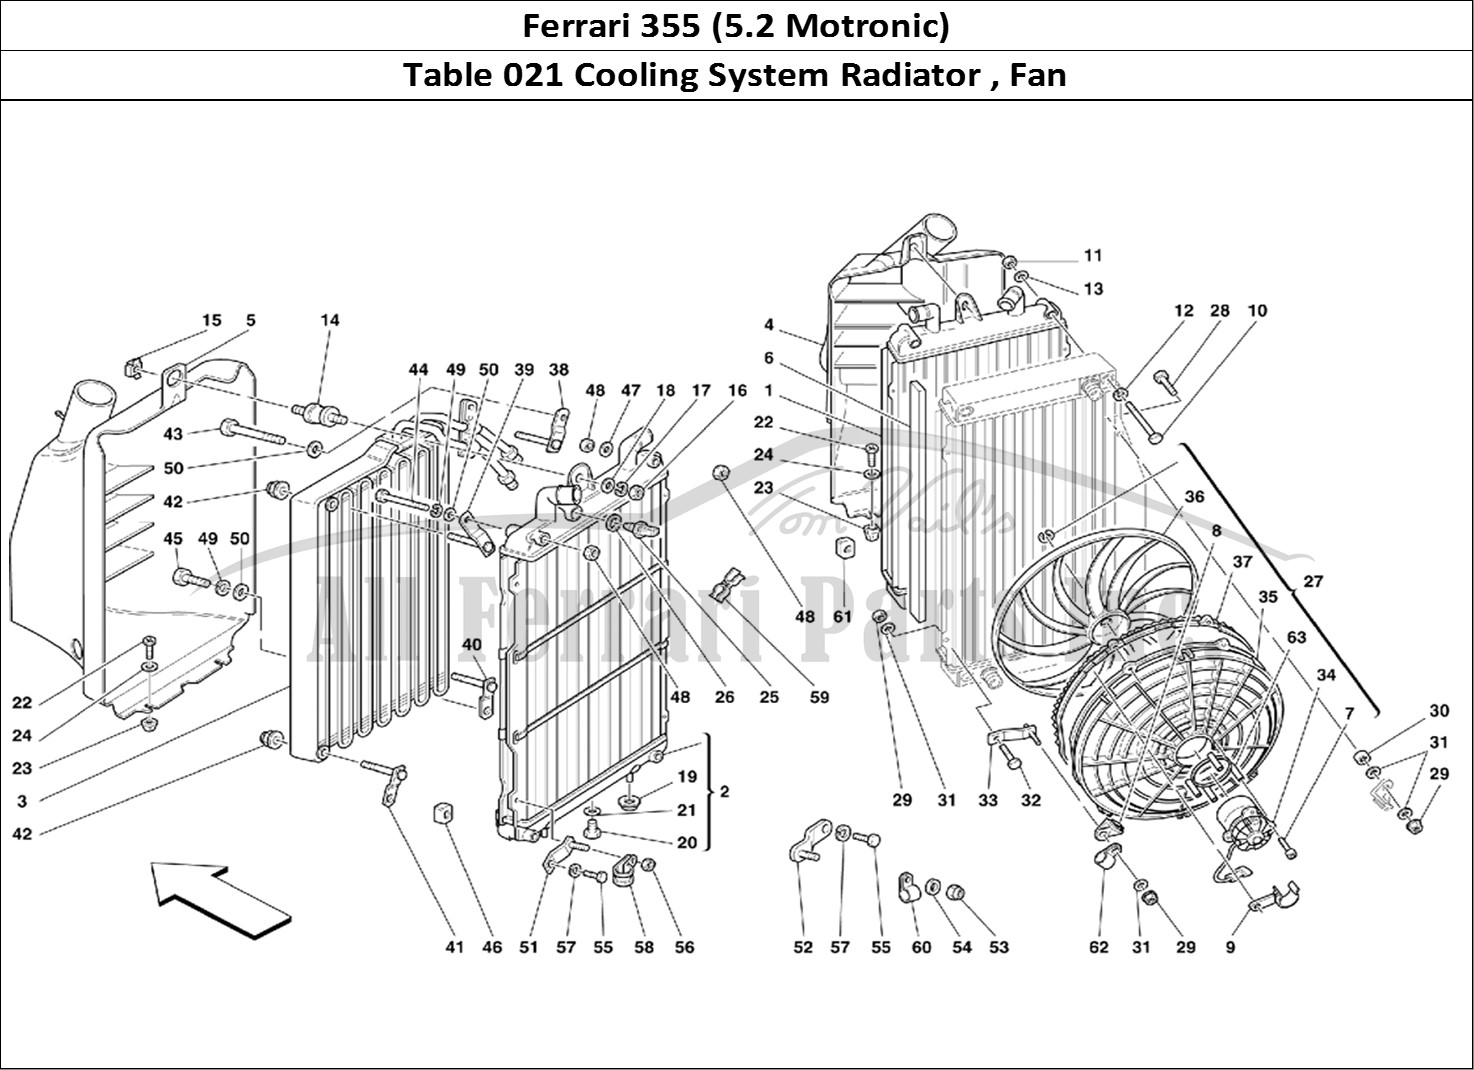 Ferrari Parts Ferrari 355 (5.2 Motronic) Page 021 Cooling System Radiators